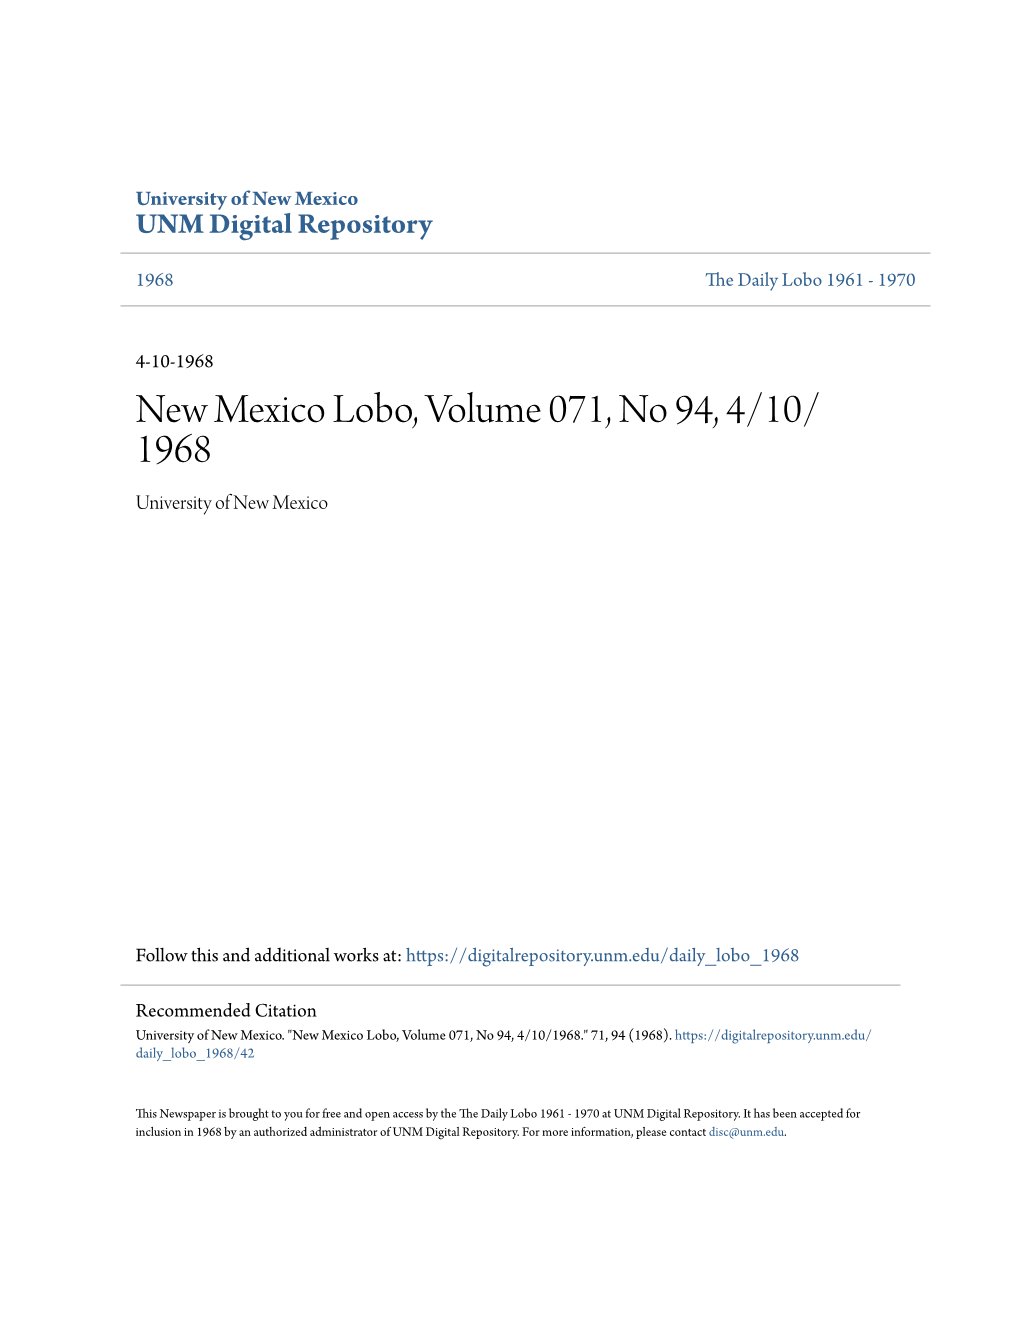 New Mexico Lobo, Volume 071, No 94, 4/10/1968." 71, 94 (1968)